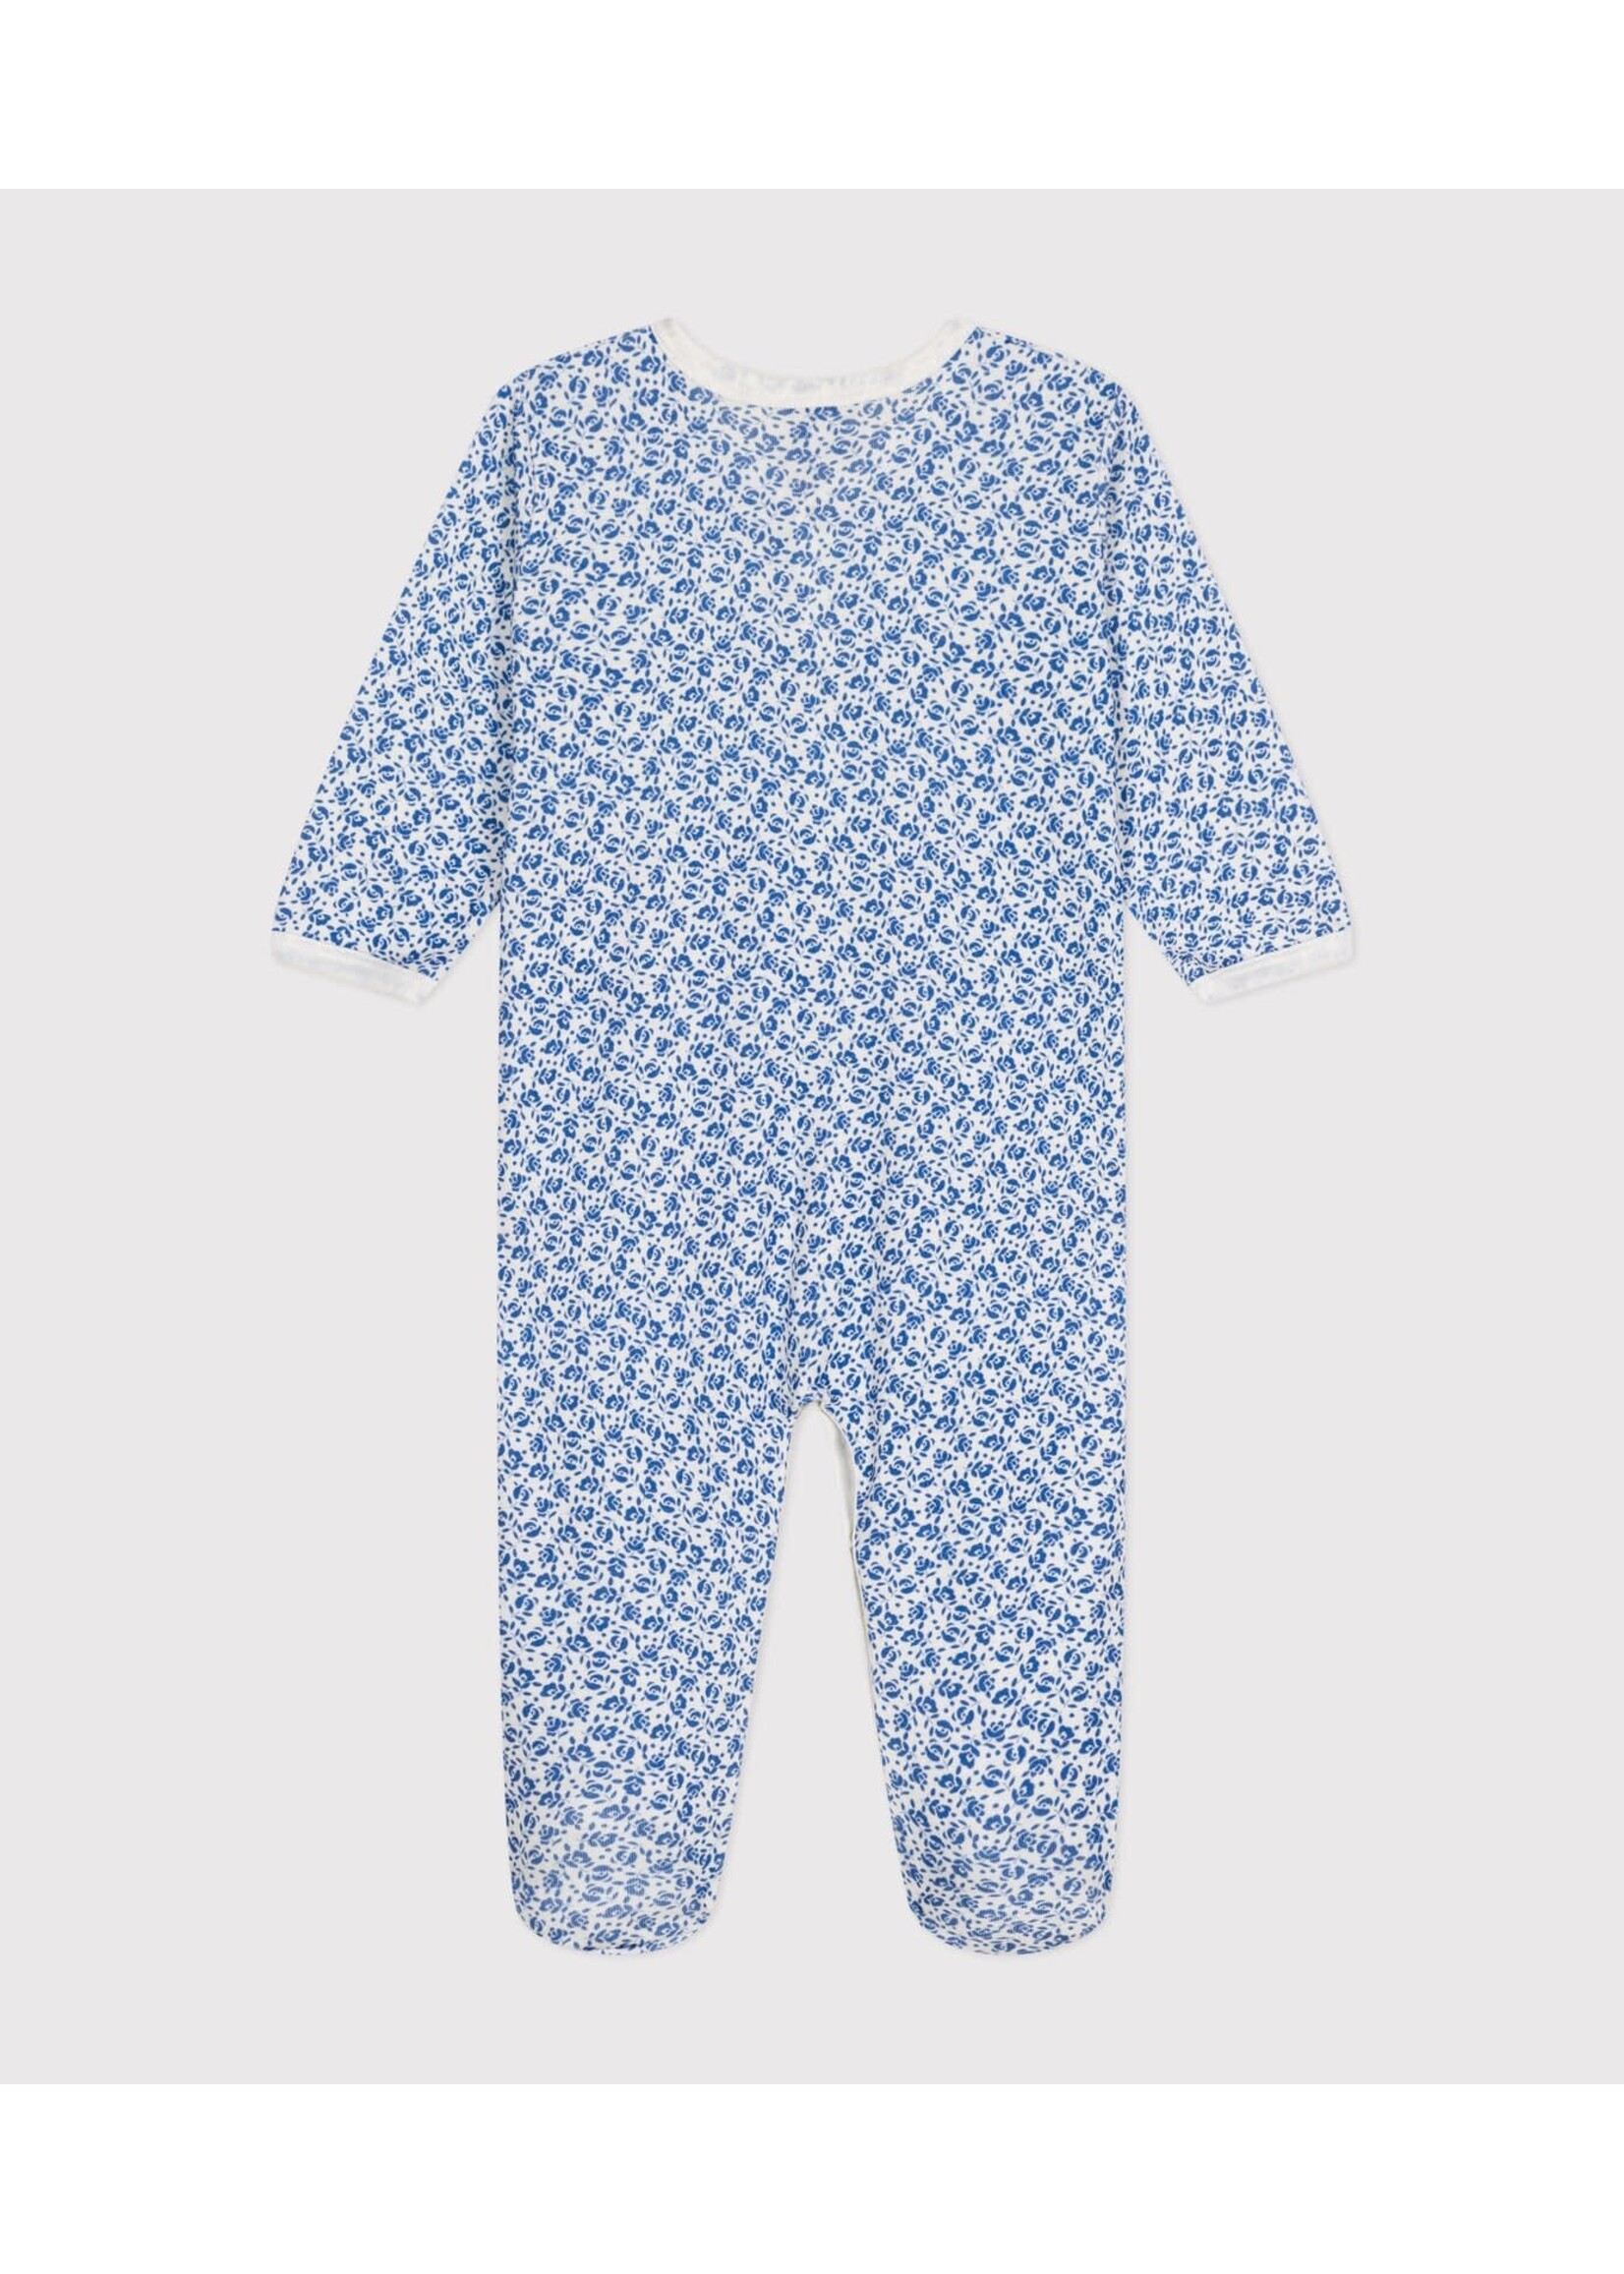 Petit Bateau Petit Bateau / Katoenen pyjama / Blauw bloemetje